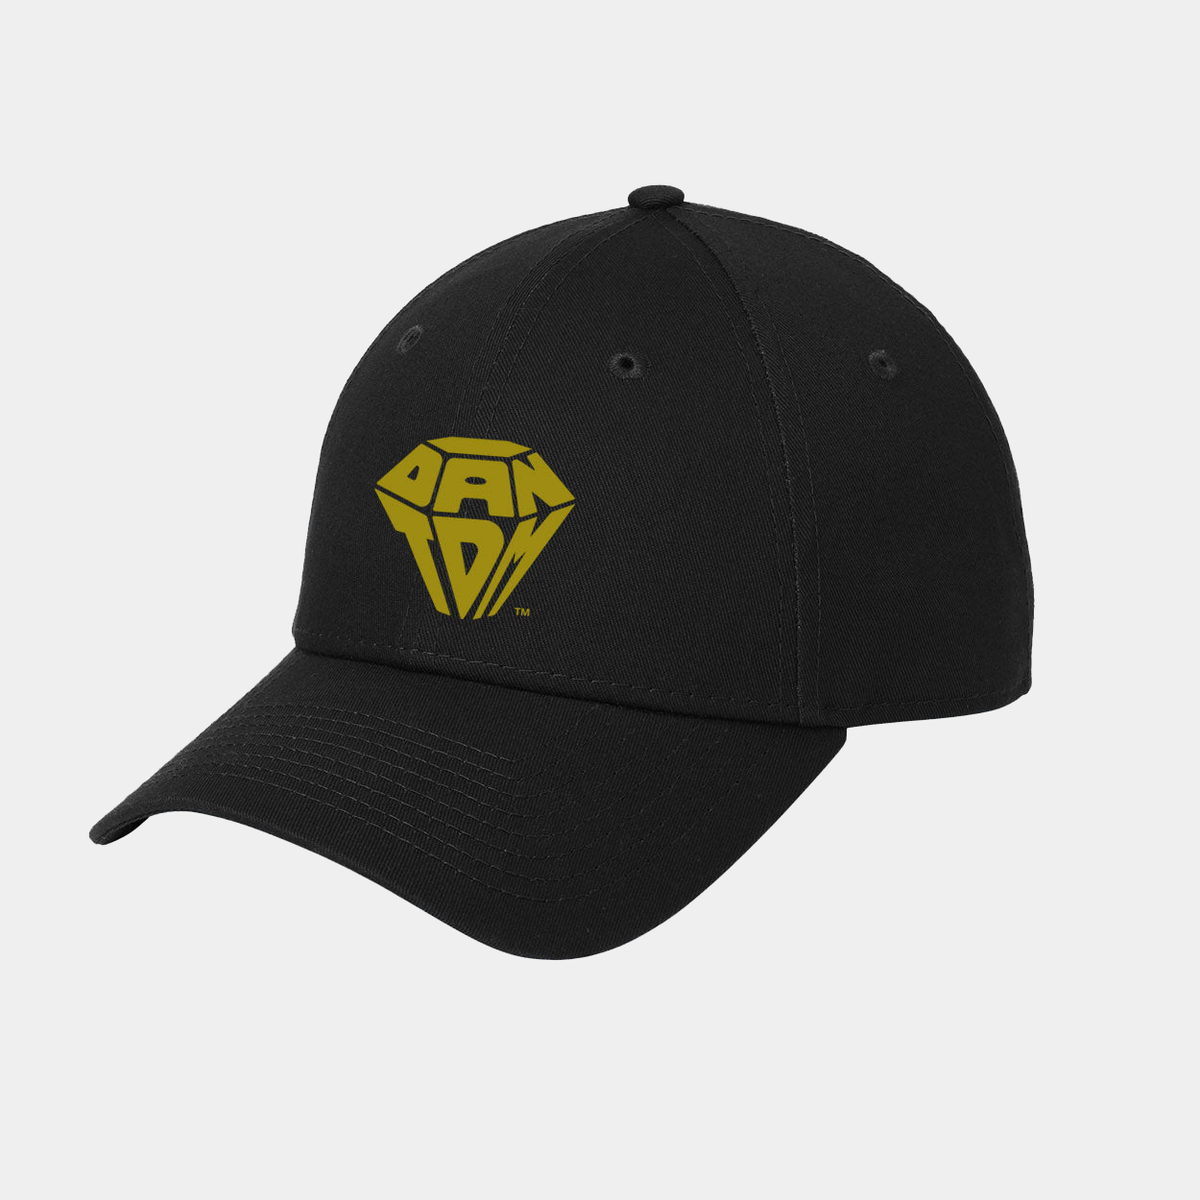 DAN TDM DIAMOND NEW ERA - ADJUSTABLE STRUCTURED CAP